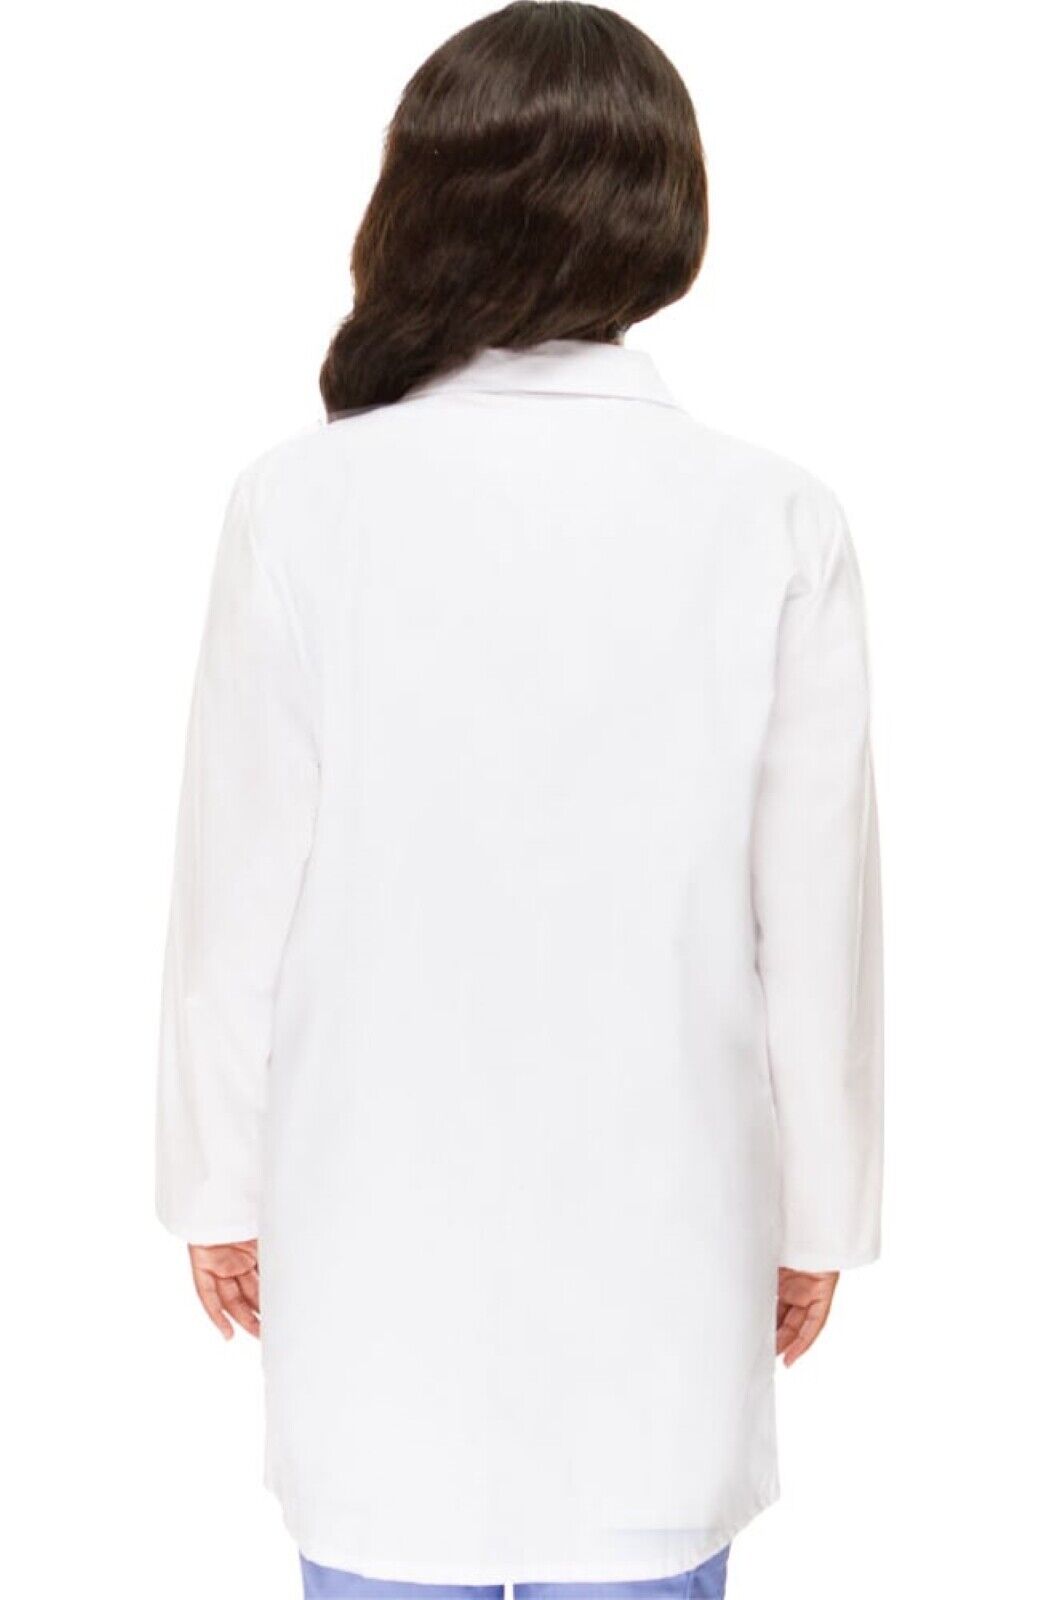 White Lab Coats All-Heart Women's Skimmer Length Size Med 3 Pockets - Lot of 2! Allheart NA - фотография #11